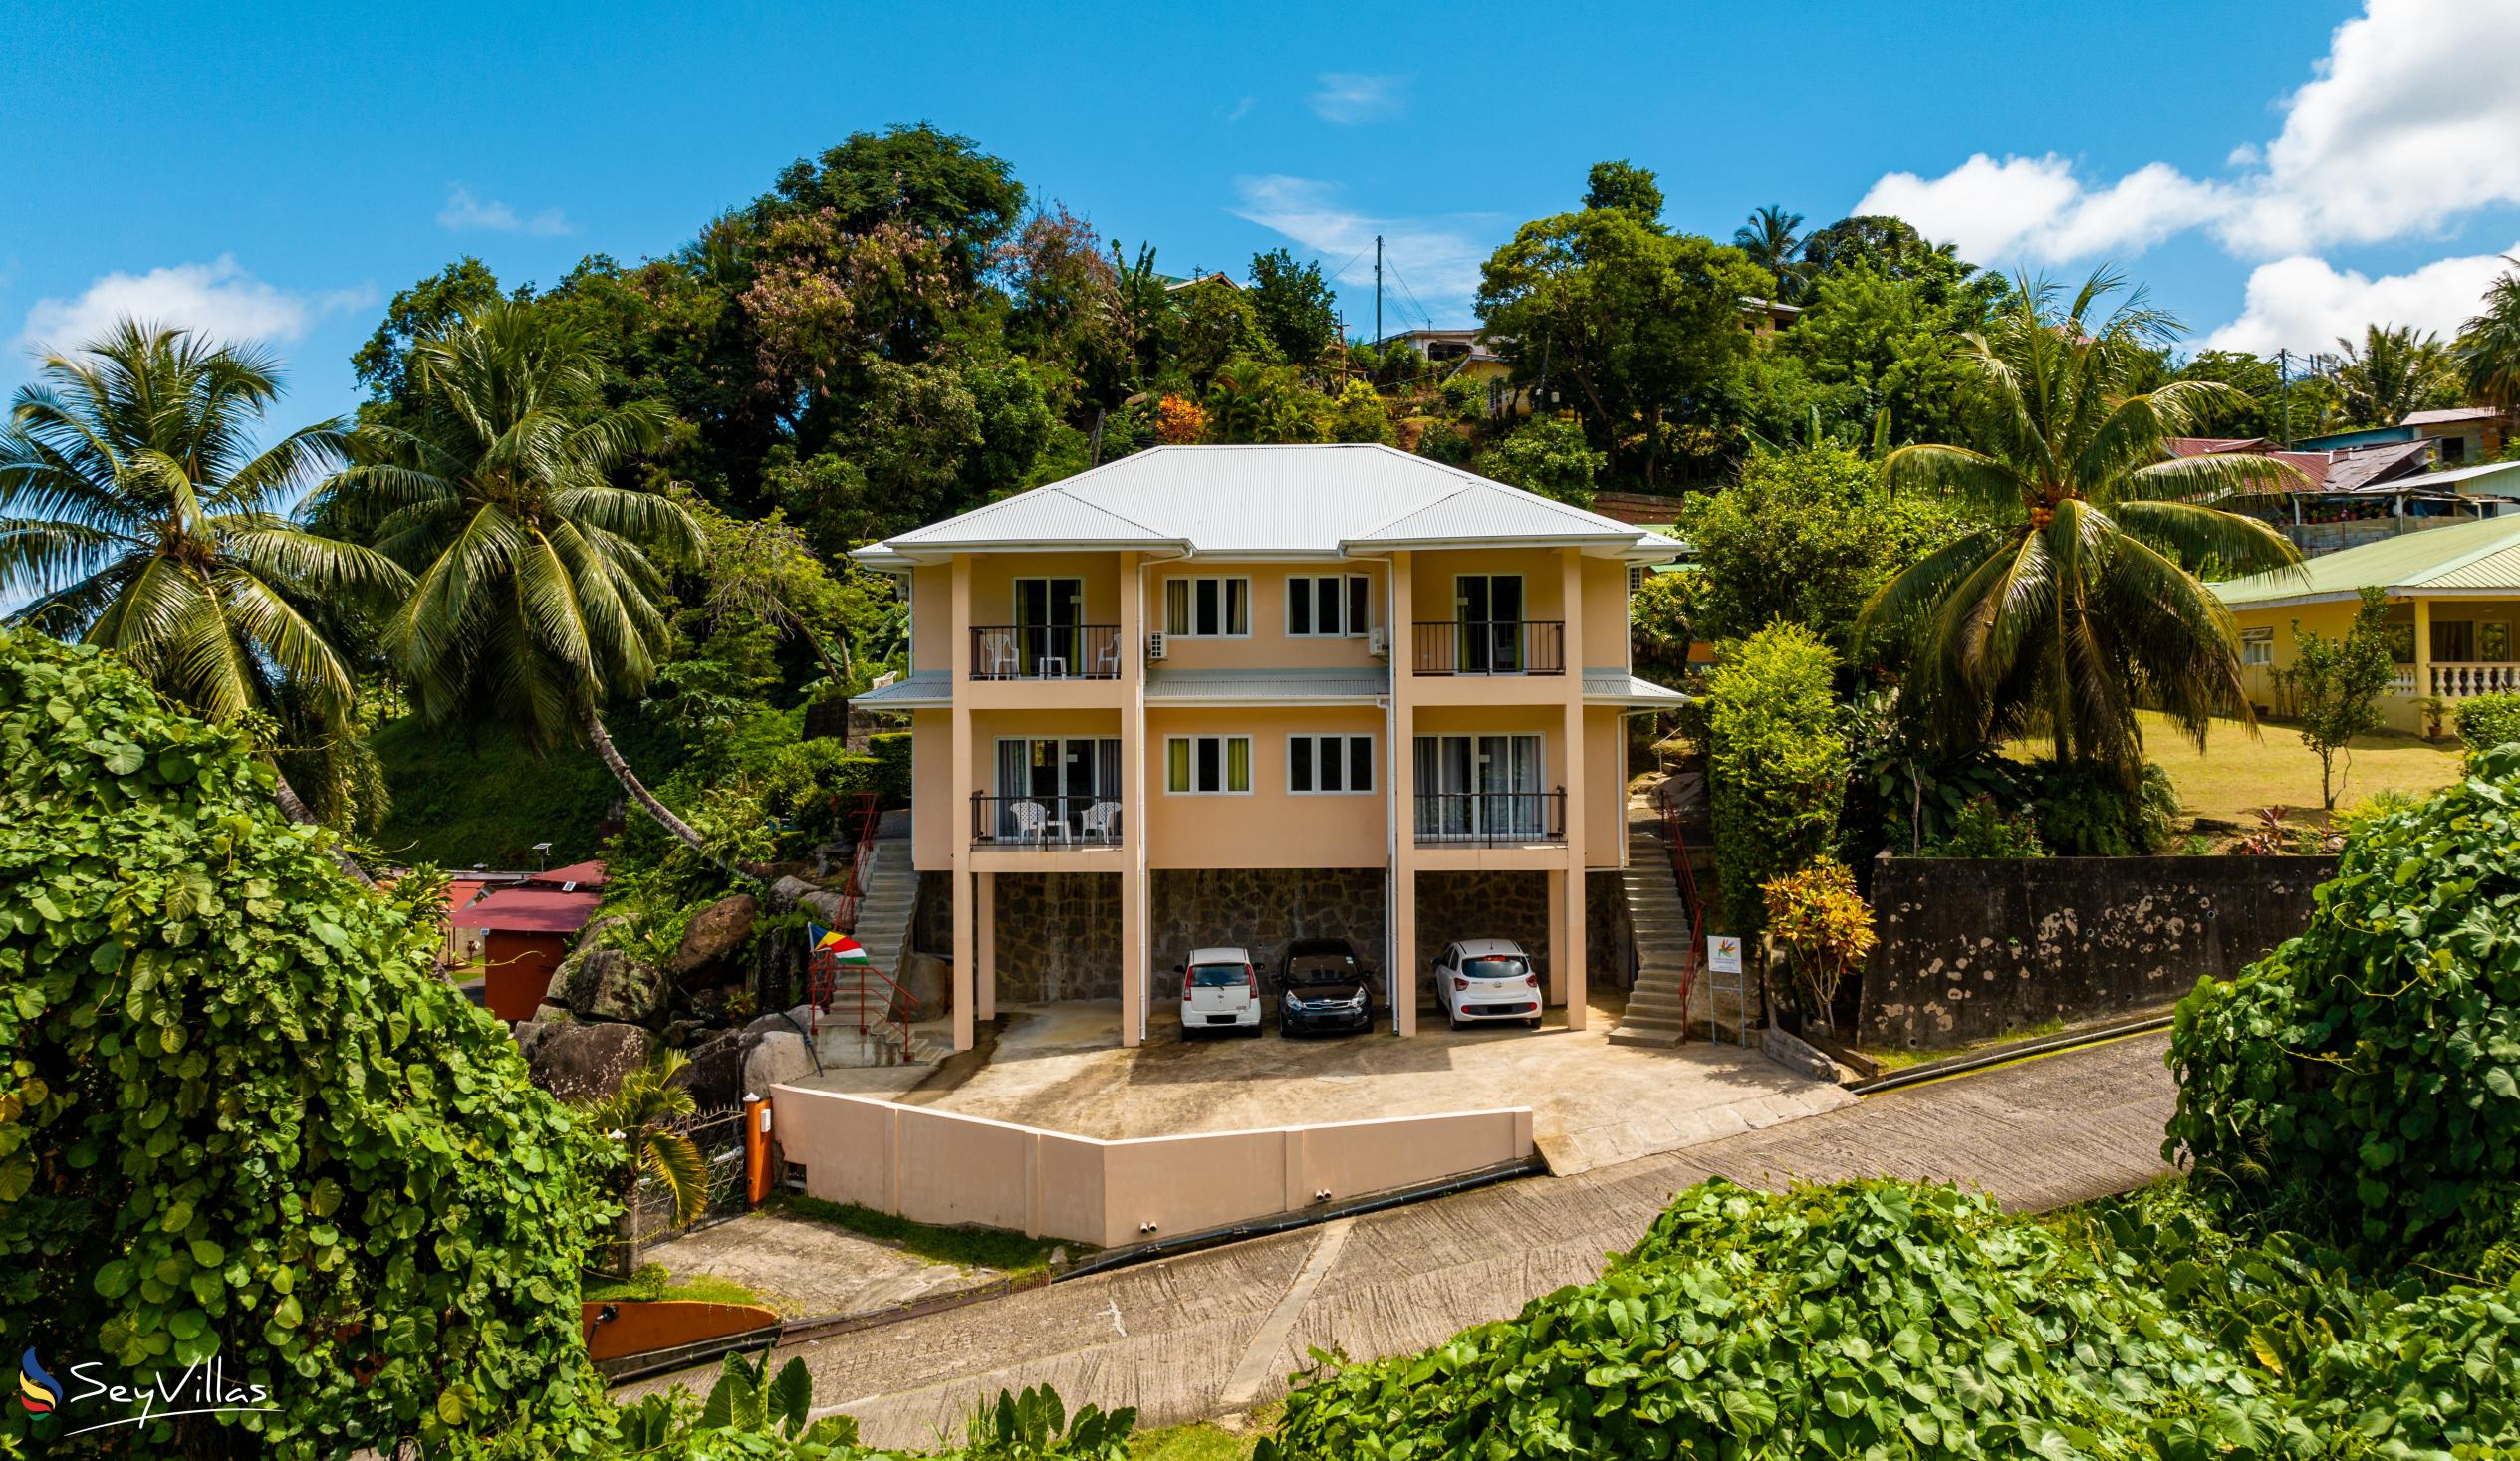 Photo 9: JAIDSS Holiday Apartments - Outdoor area - Mahé (Seychelles)